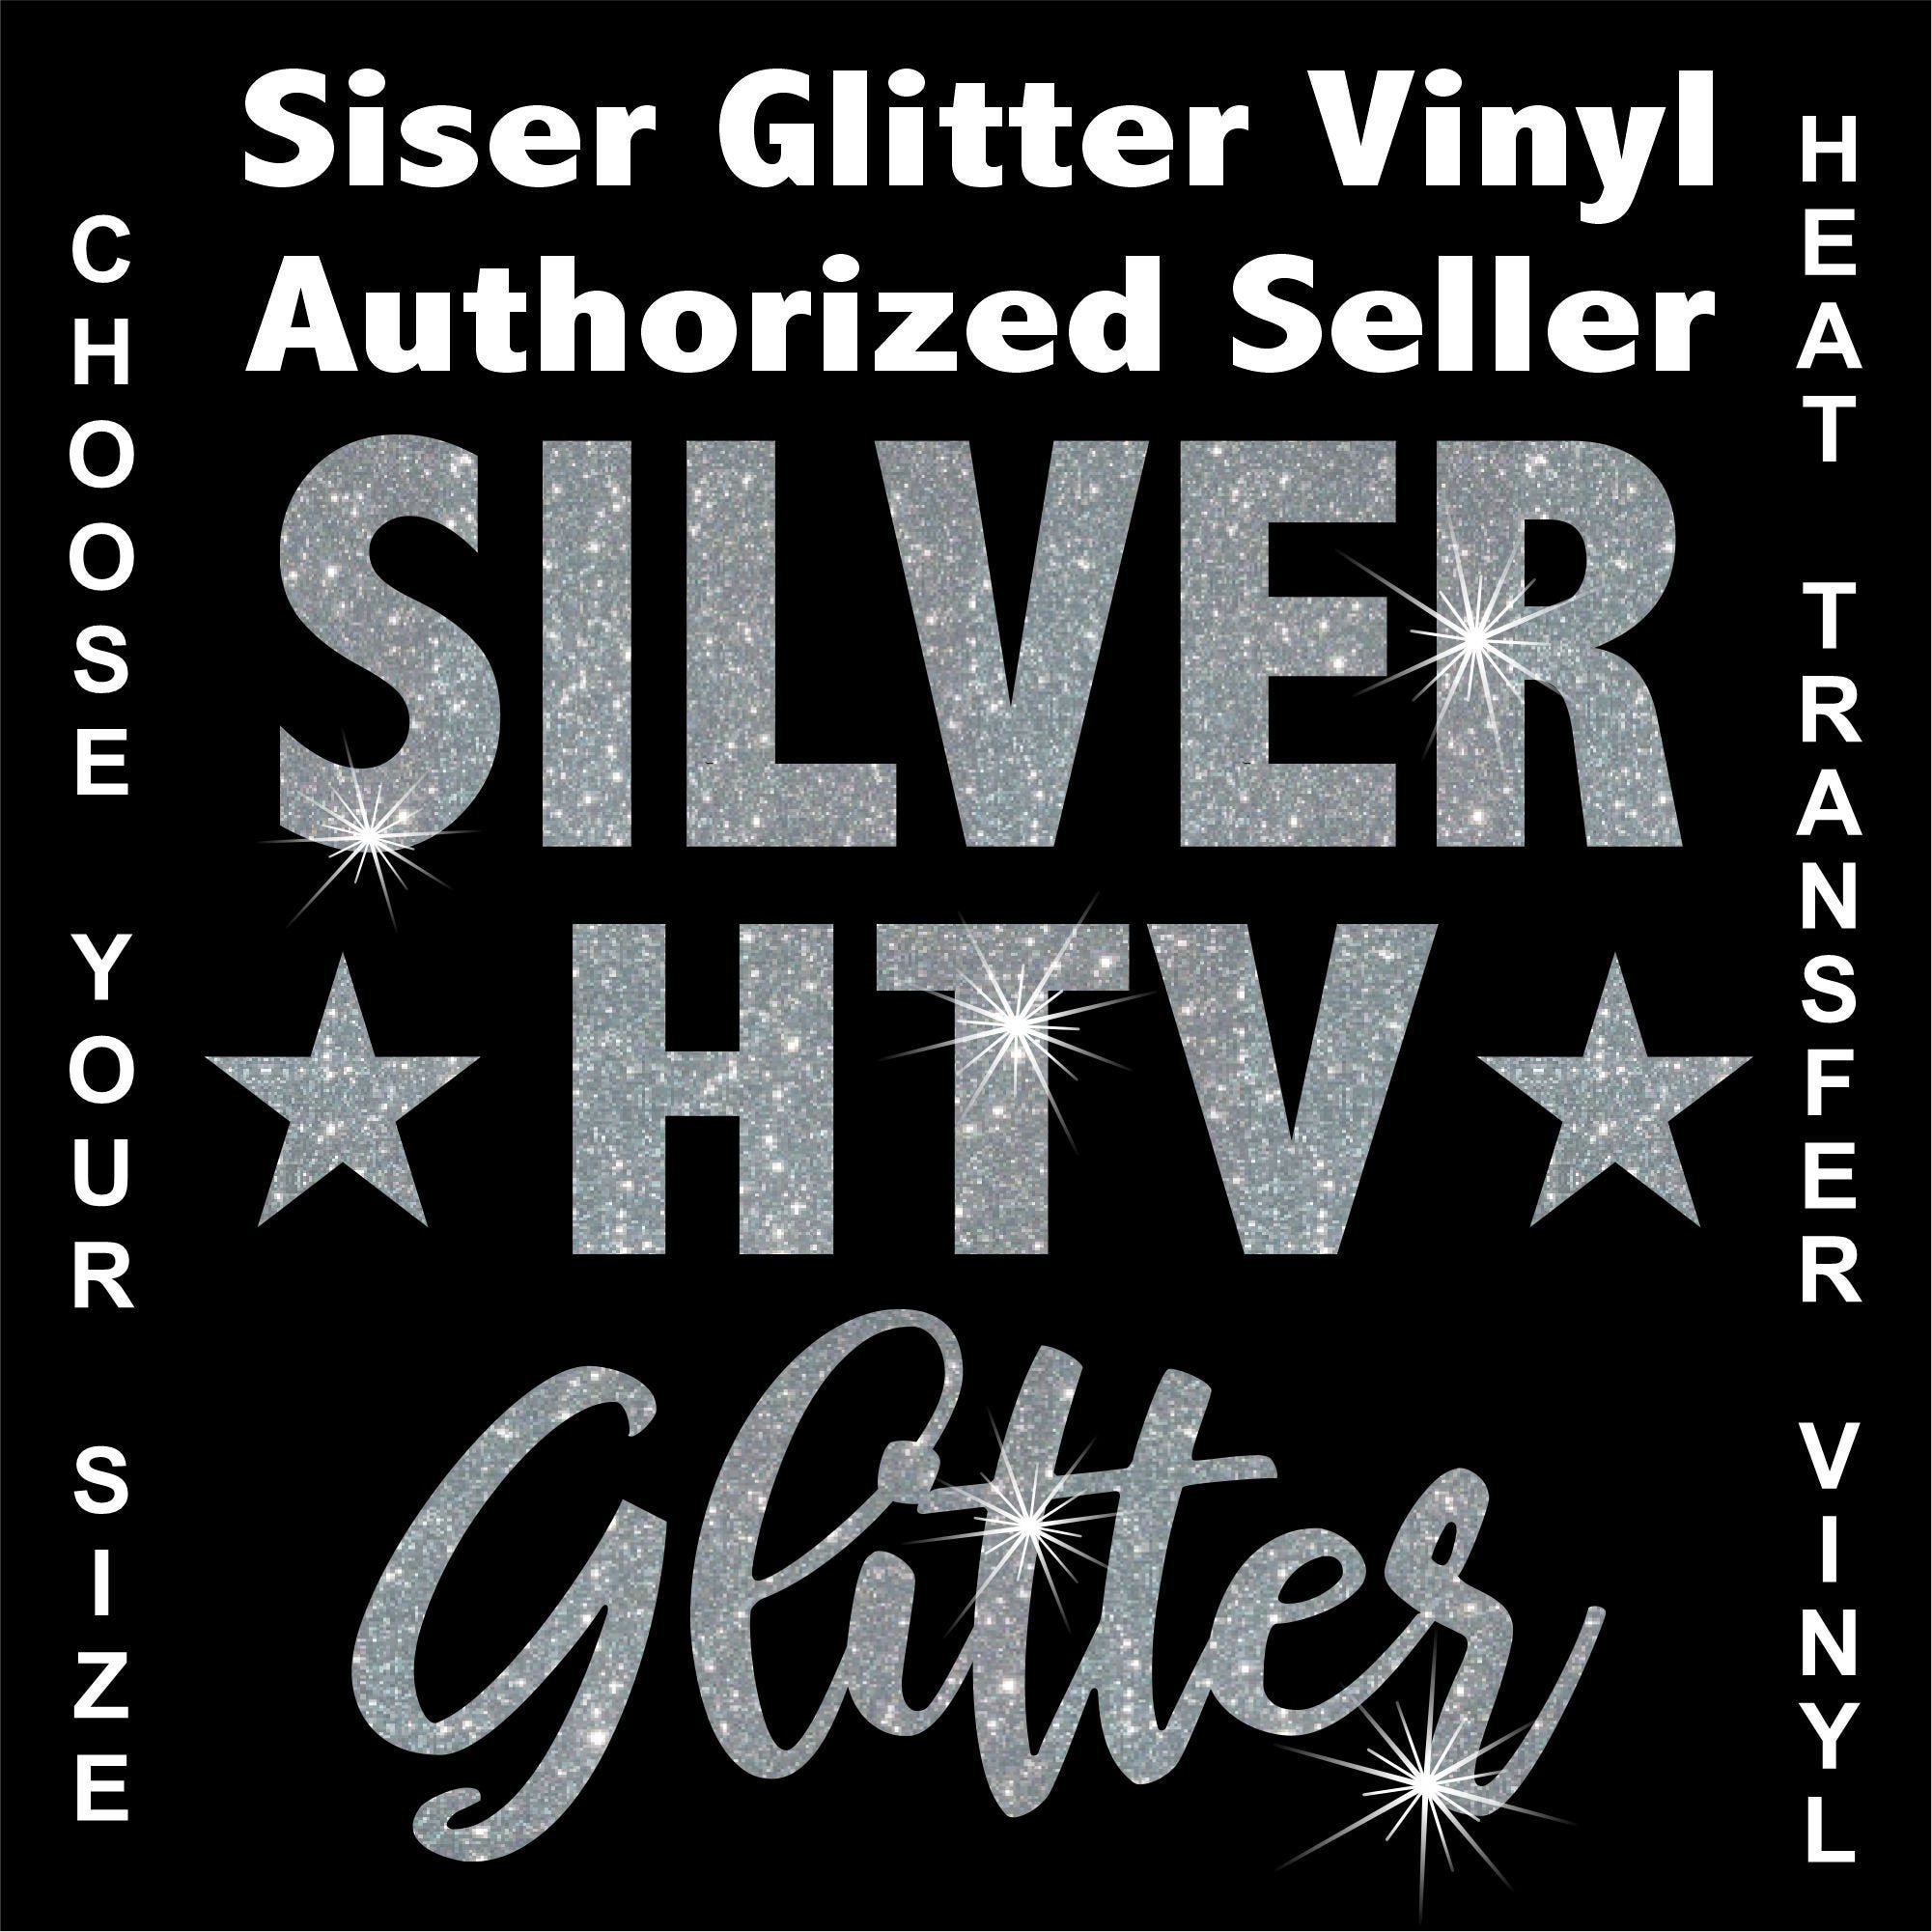 Holo Silver Glitter Vinyl Sheet Sheet Heat Transfer - Texas Rhinestone